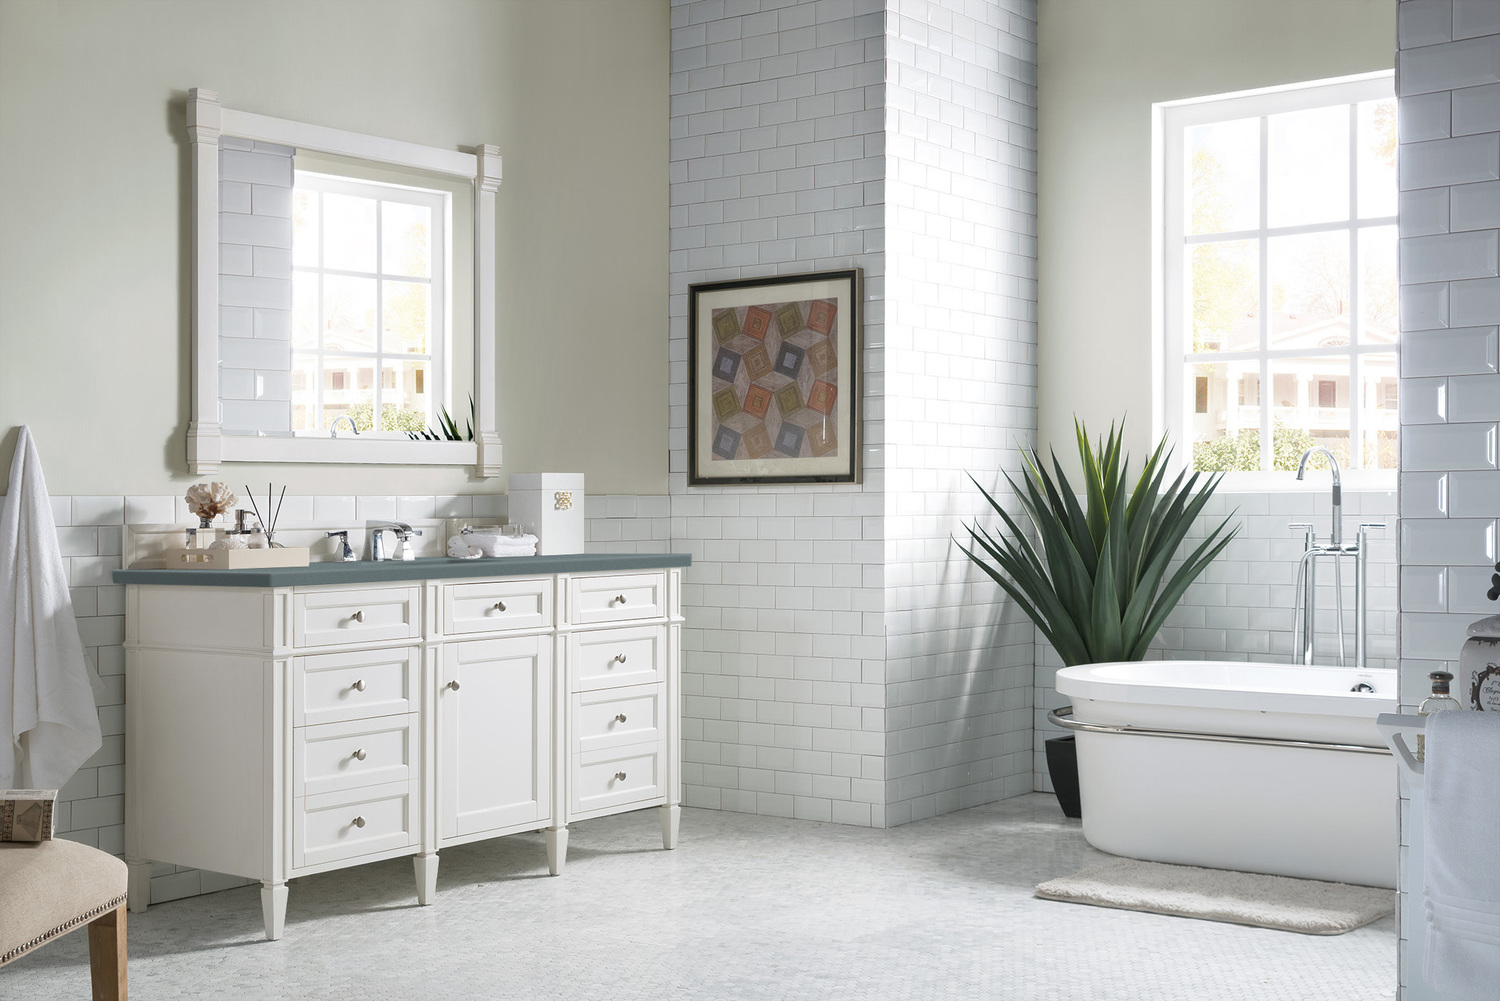 wood bathroom countertops ideas James Martin Vanity Bright White Transitional